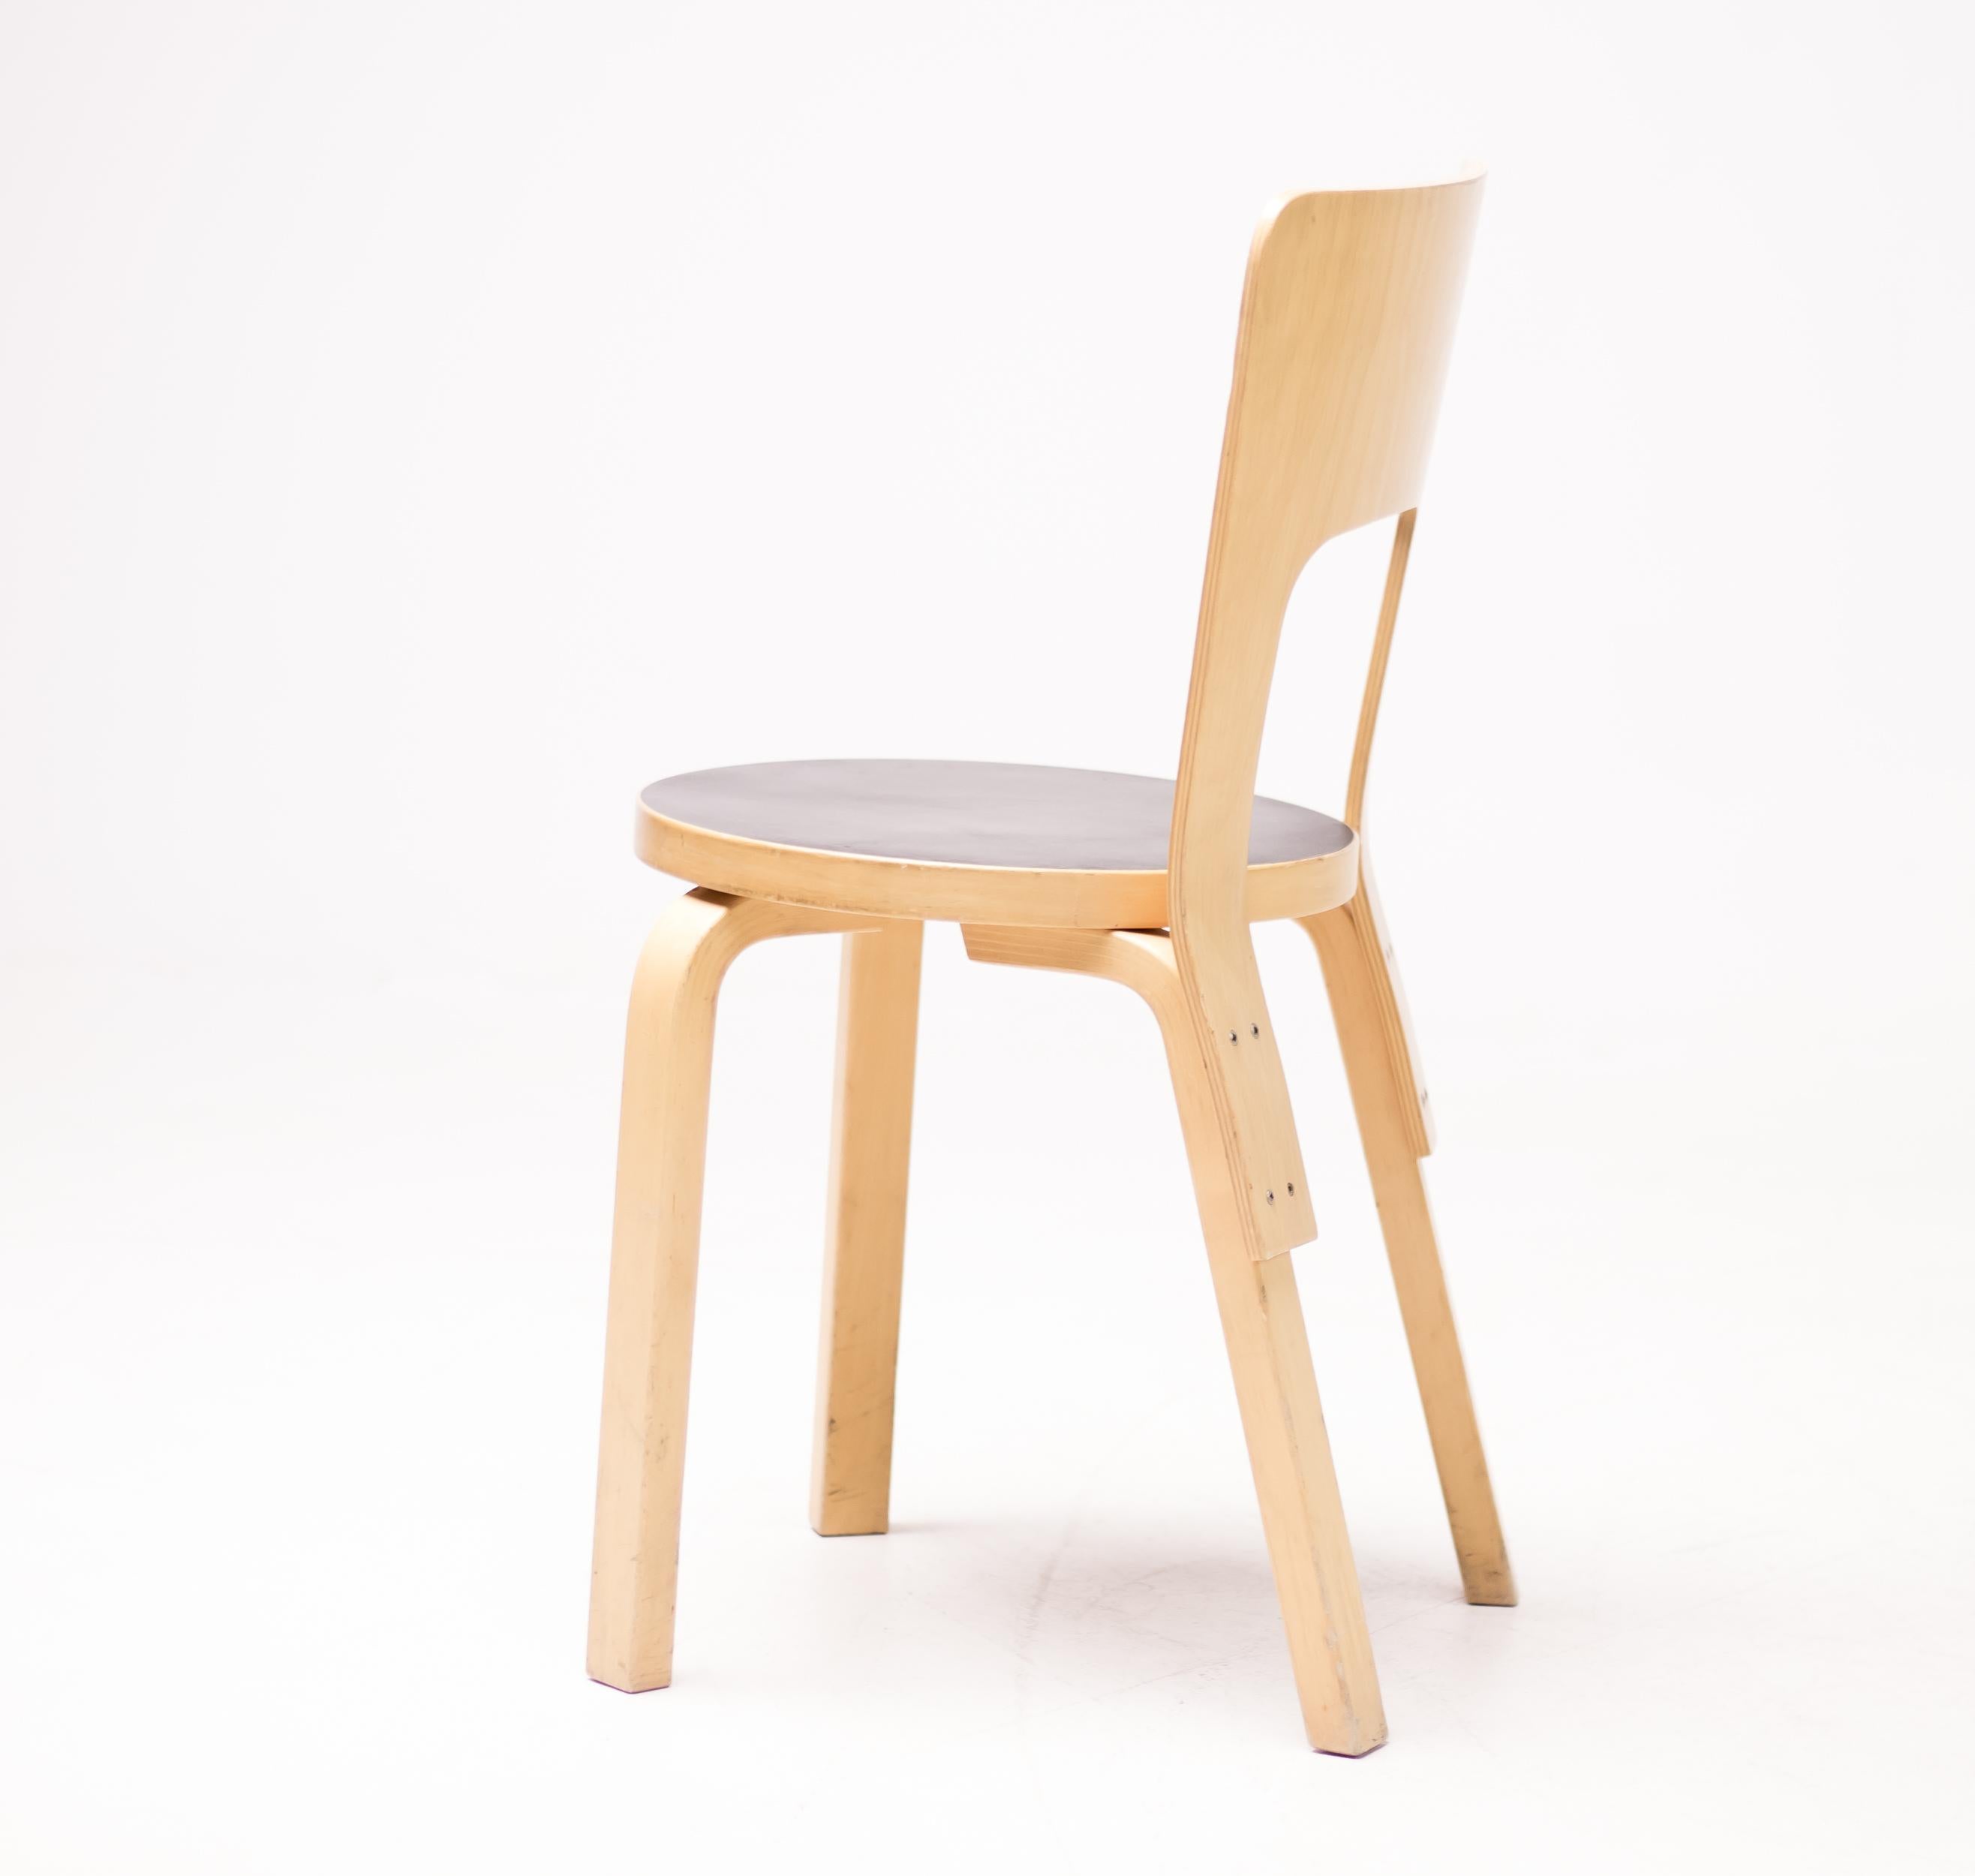 Finnish Alvar Aalto Model 66 Chairs